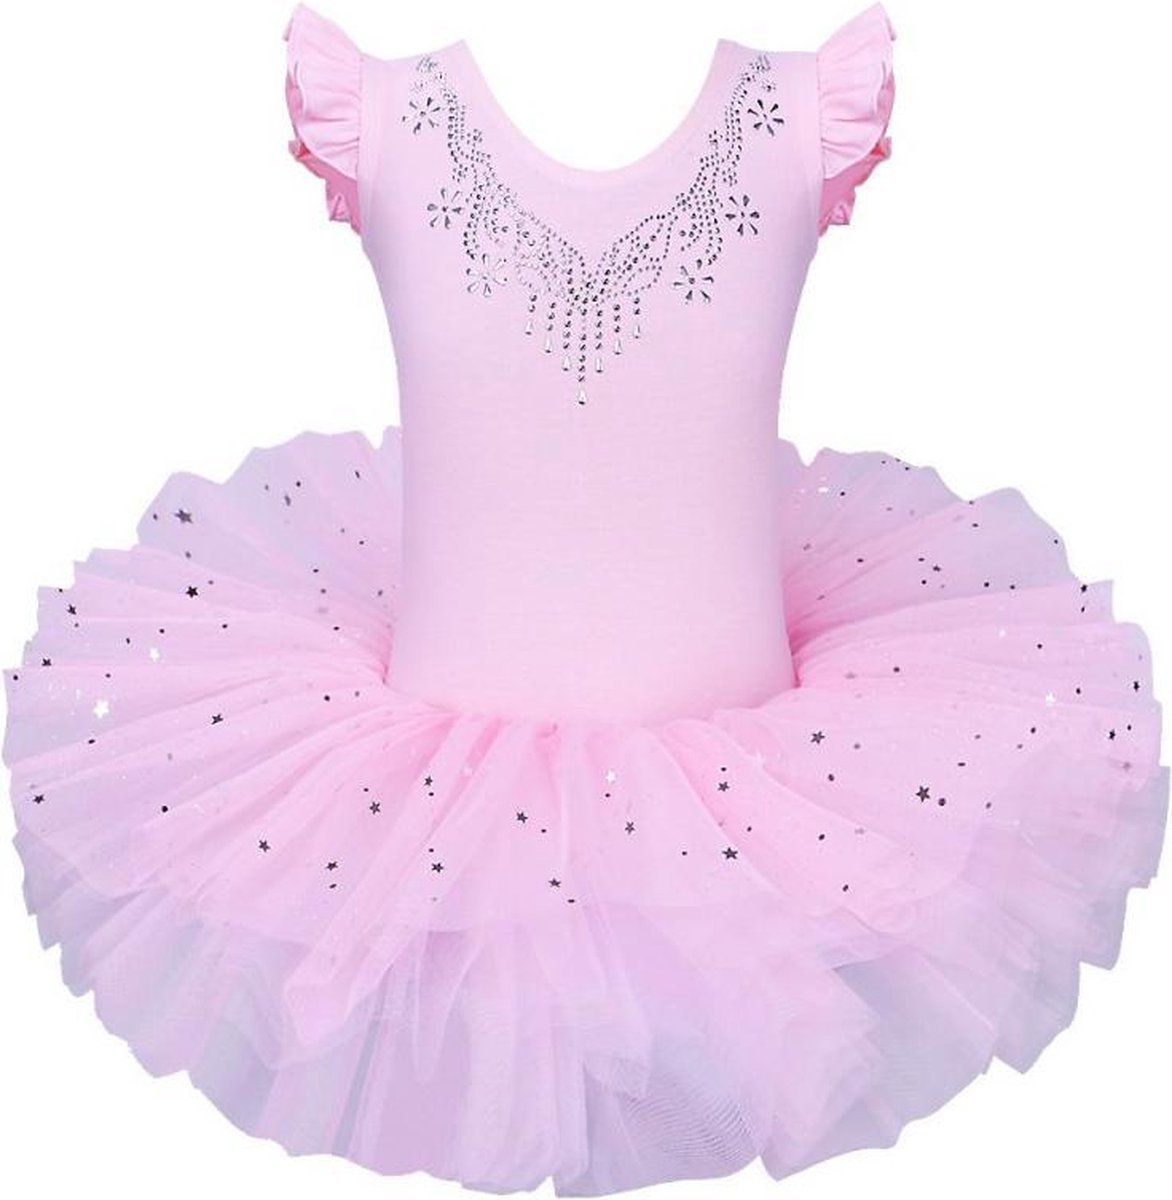 Balletpakje met Tutu Roze Sparkle Style - Ballet - prinsessen tutu verkleed jurk meisje EAN 6013722660609